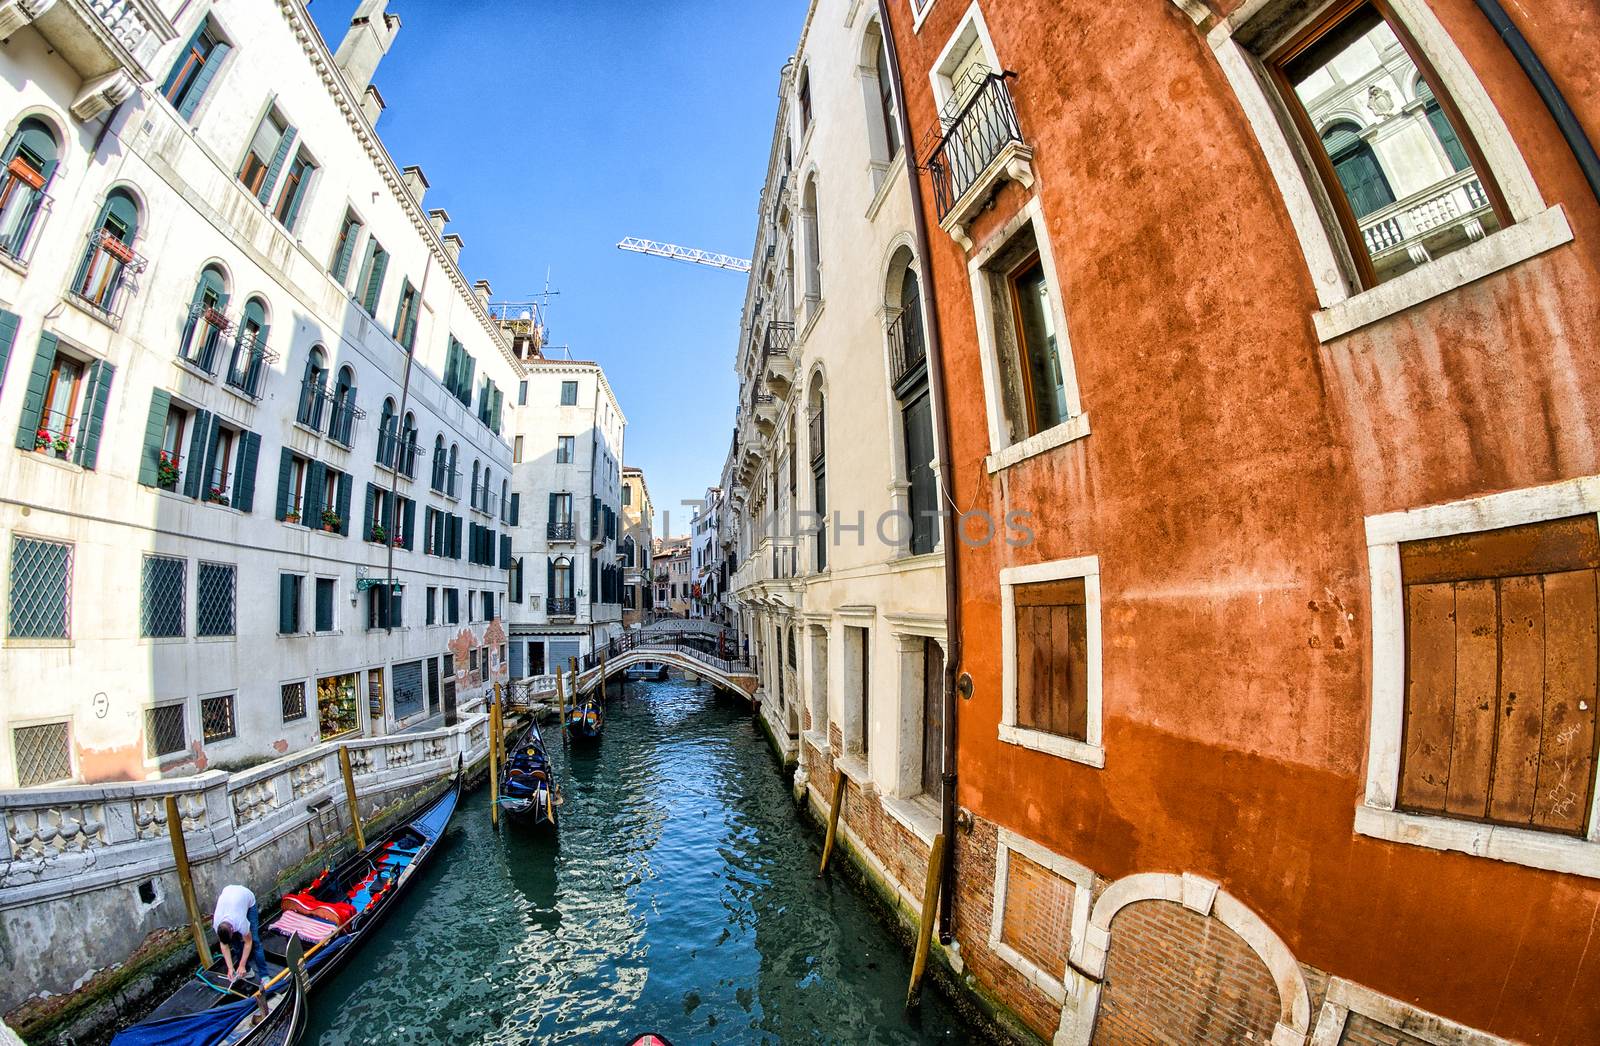 VENICE - APRIL 7, 2014: Tourists enjoy city canals on a beautifu by jovannig